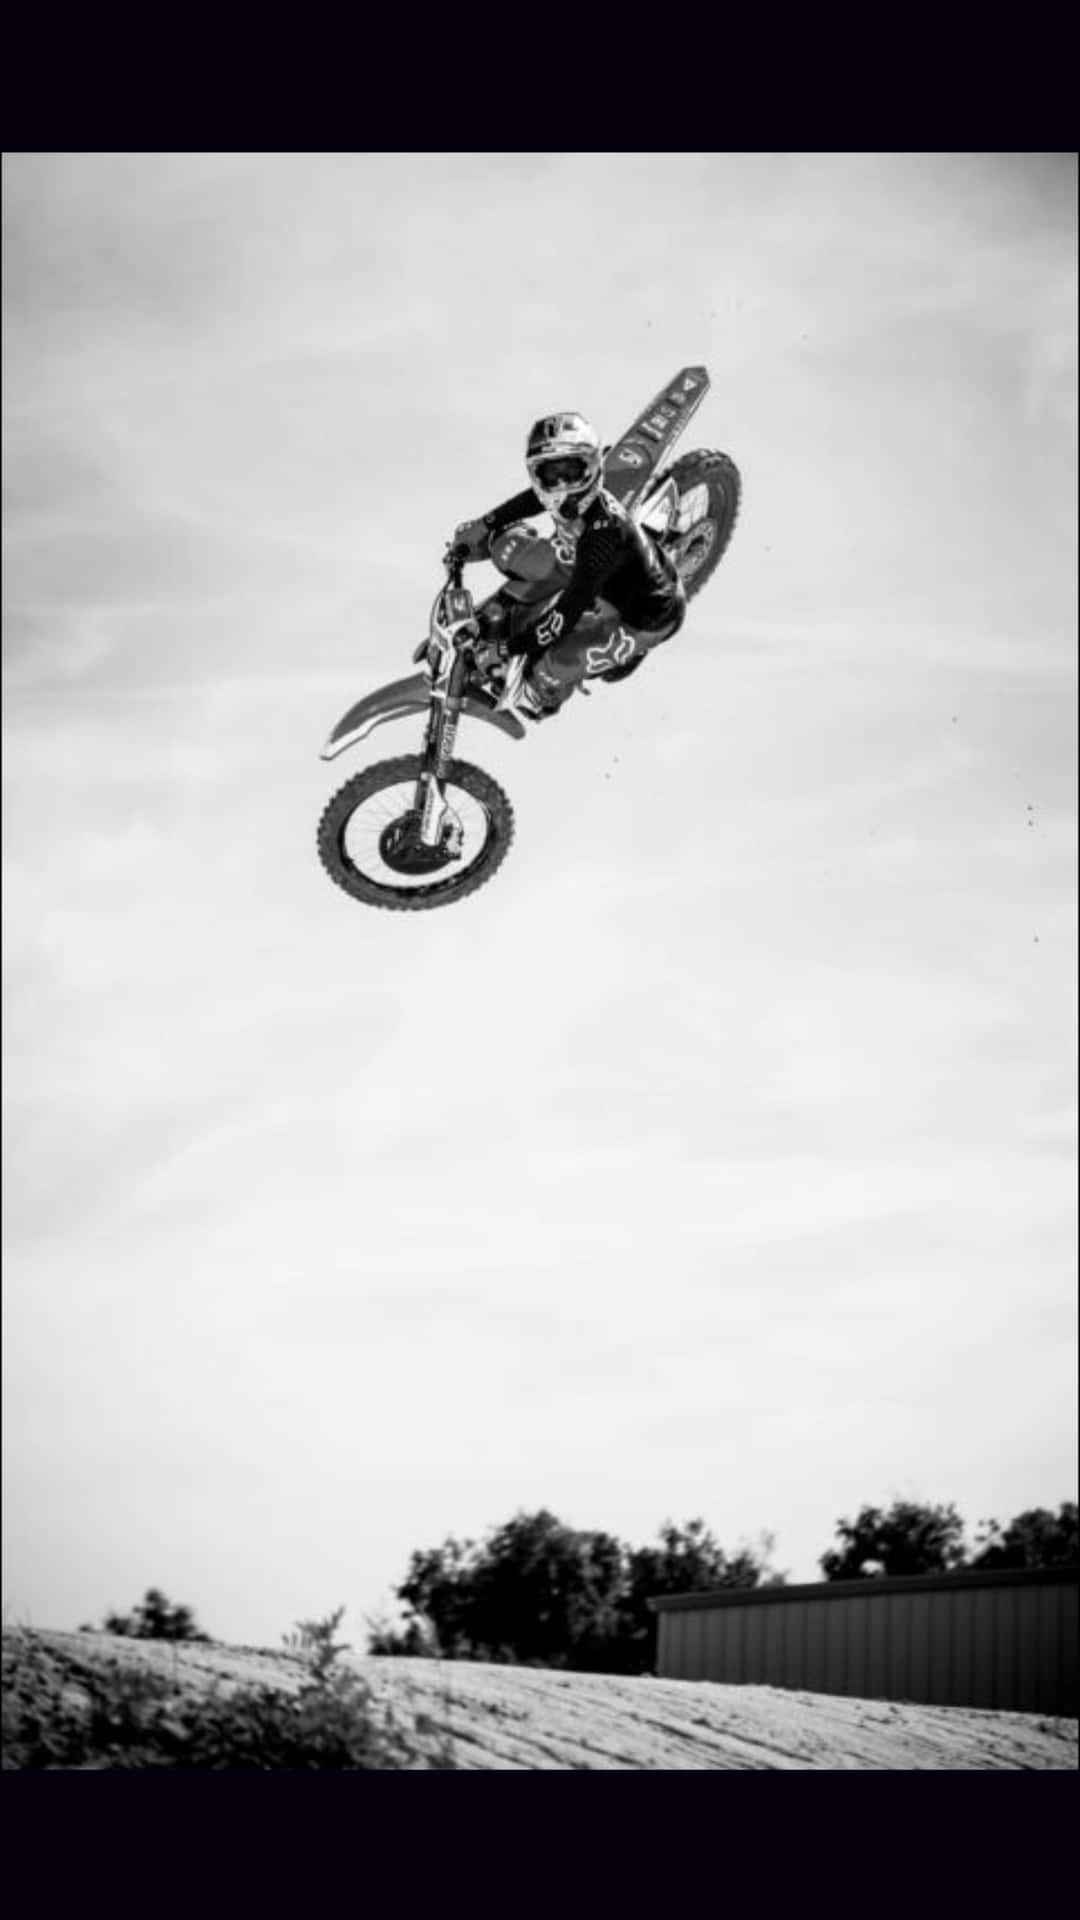 A Person Riding A Dirt Bike In The Air Wallpaper